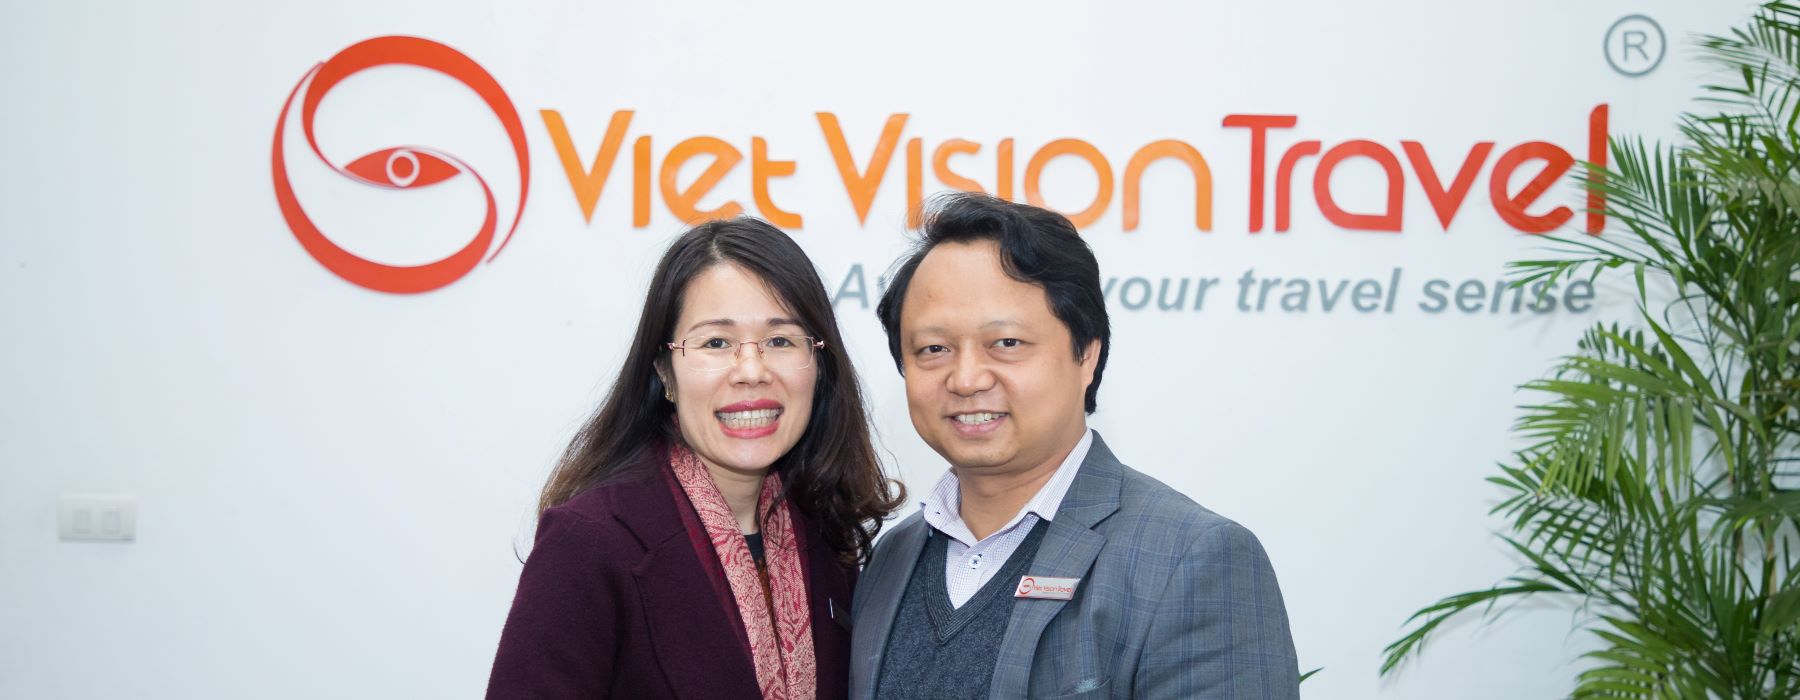 directors of viet vision travel update